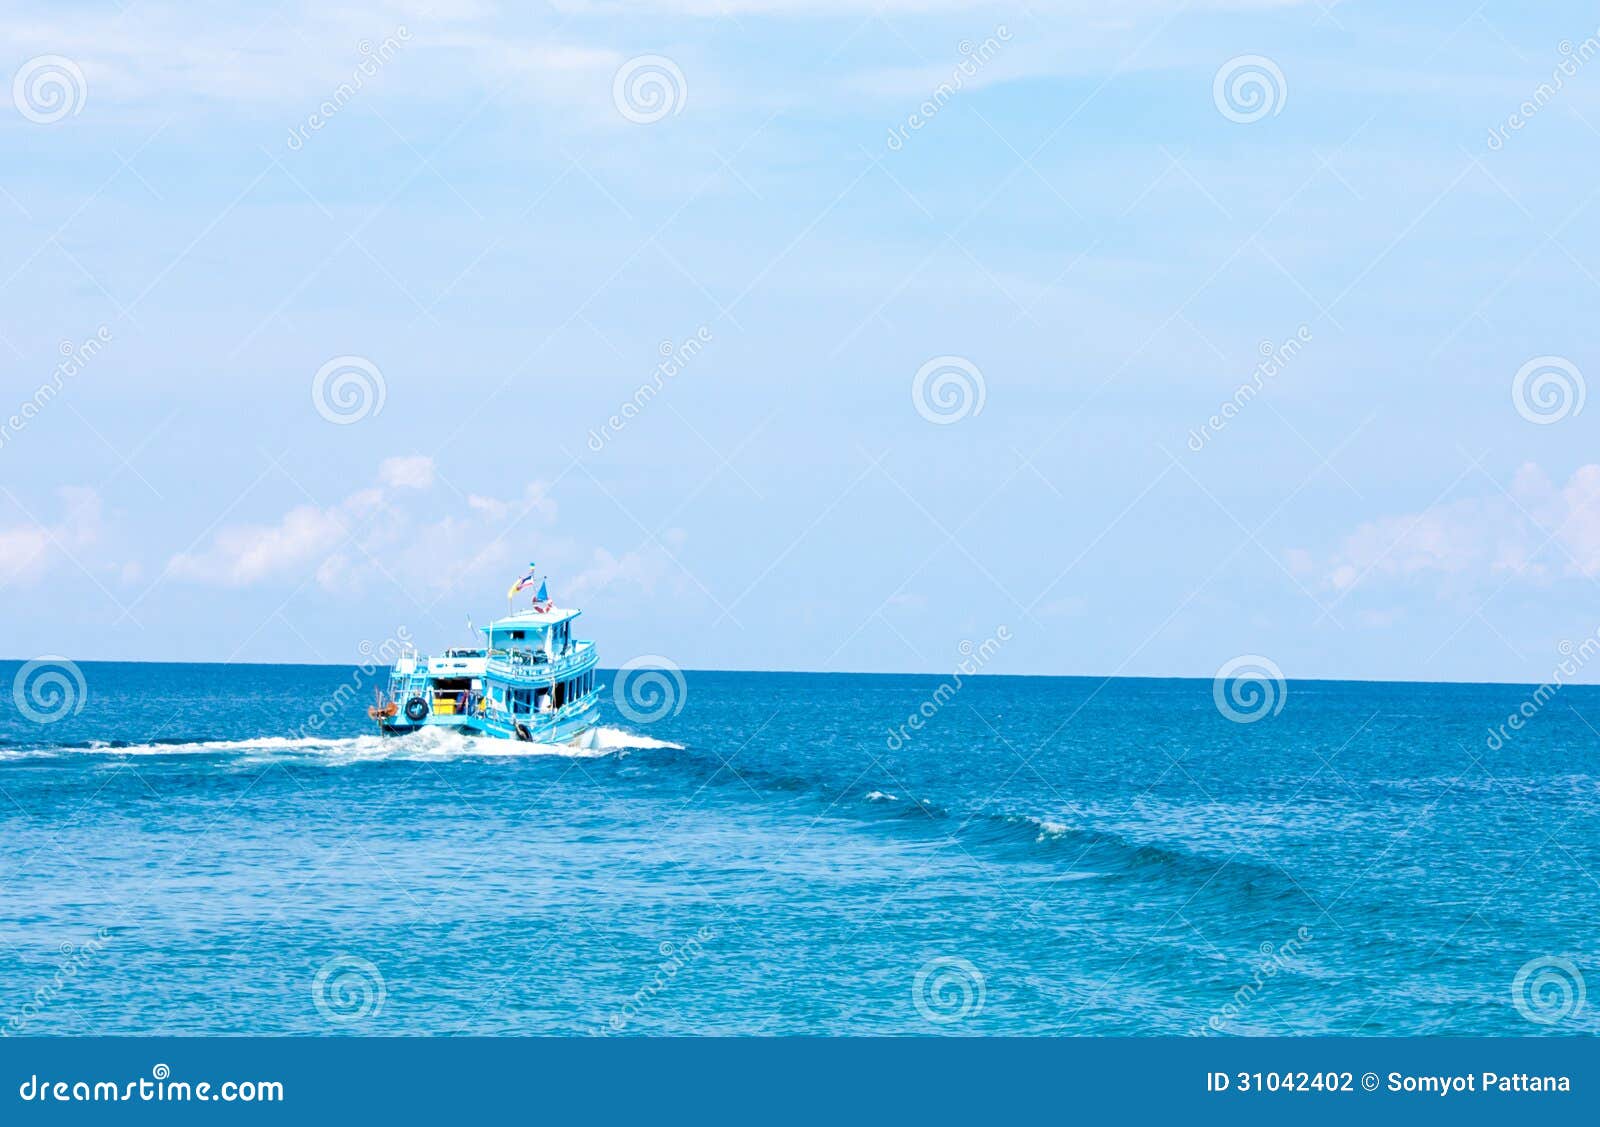 Stock Photography: Fisherman boat